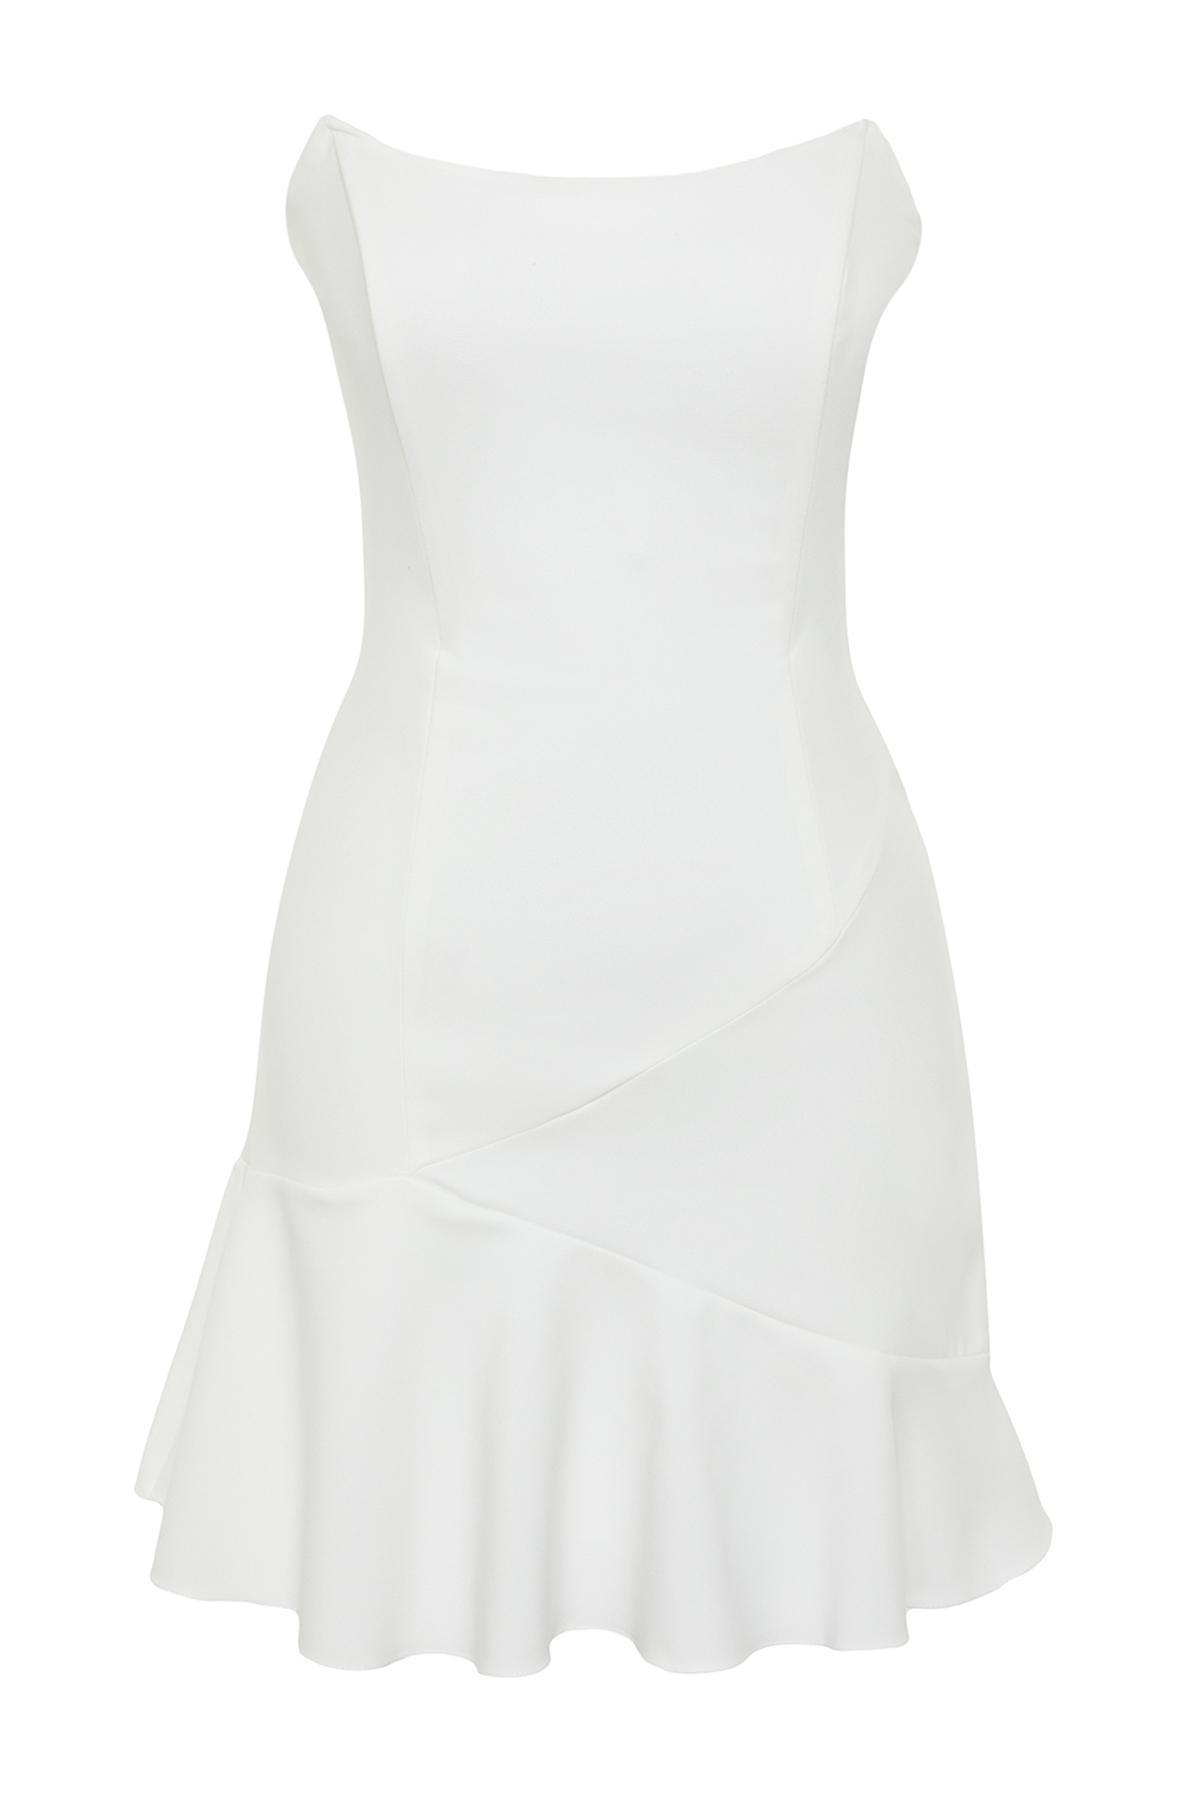 Trendyol - White Lined Flounce Elegant Occasion Wear Dress